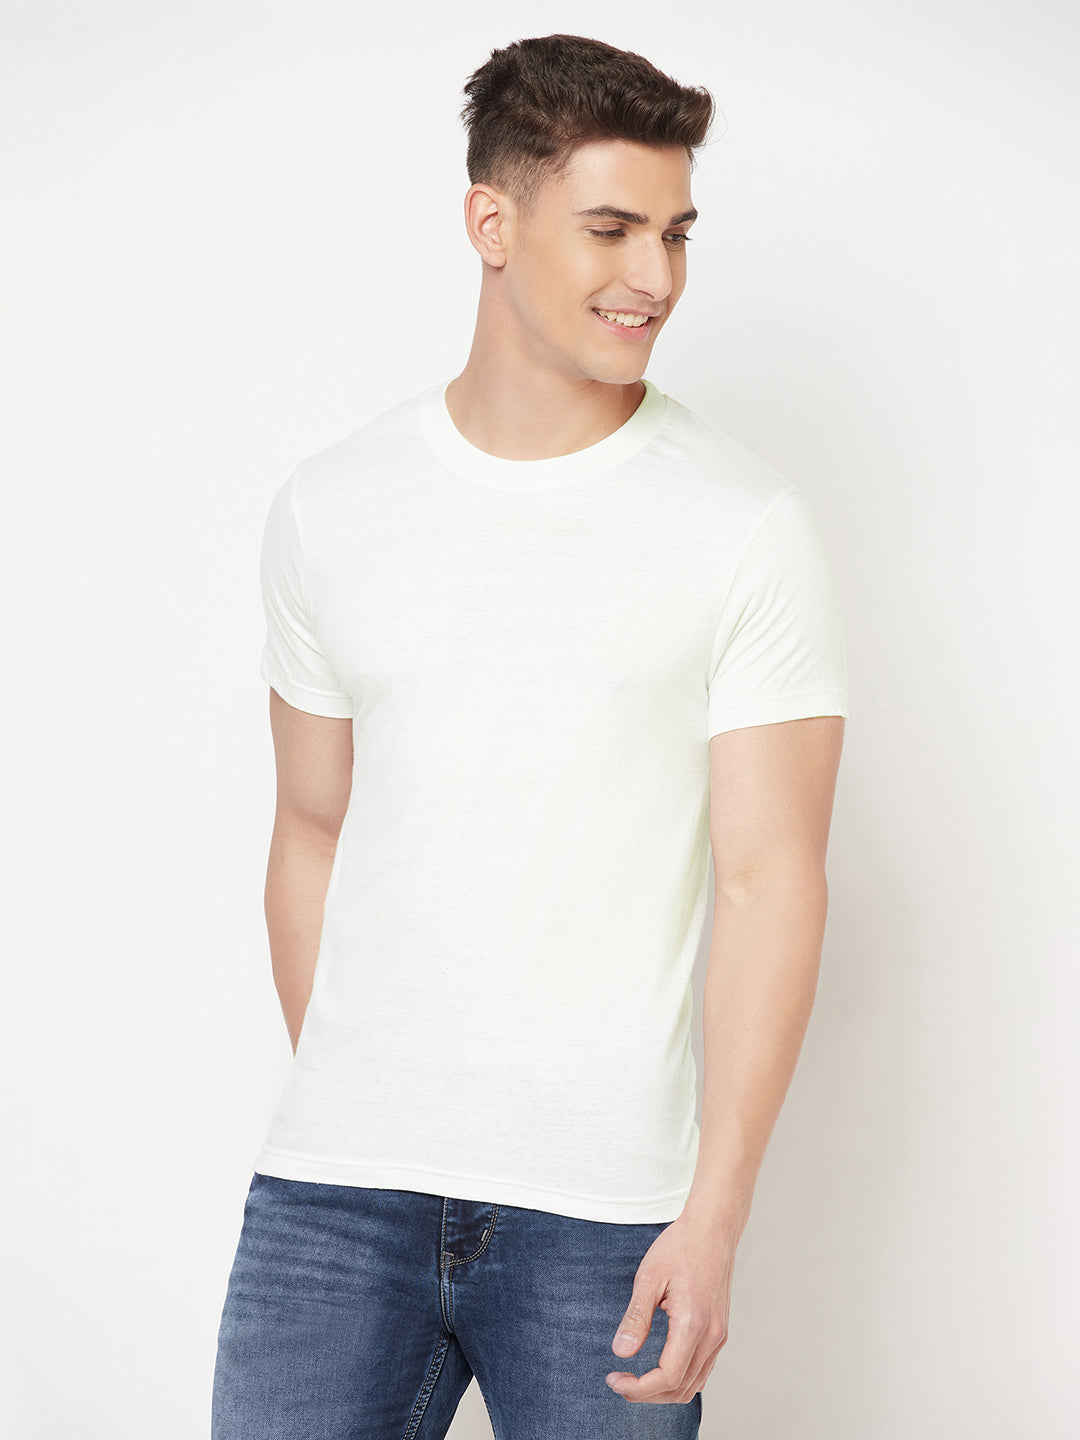 Premium Cotton Tshirts  (Pack of 3- White,Grey,Green)